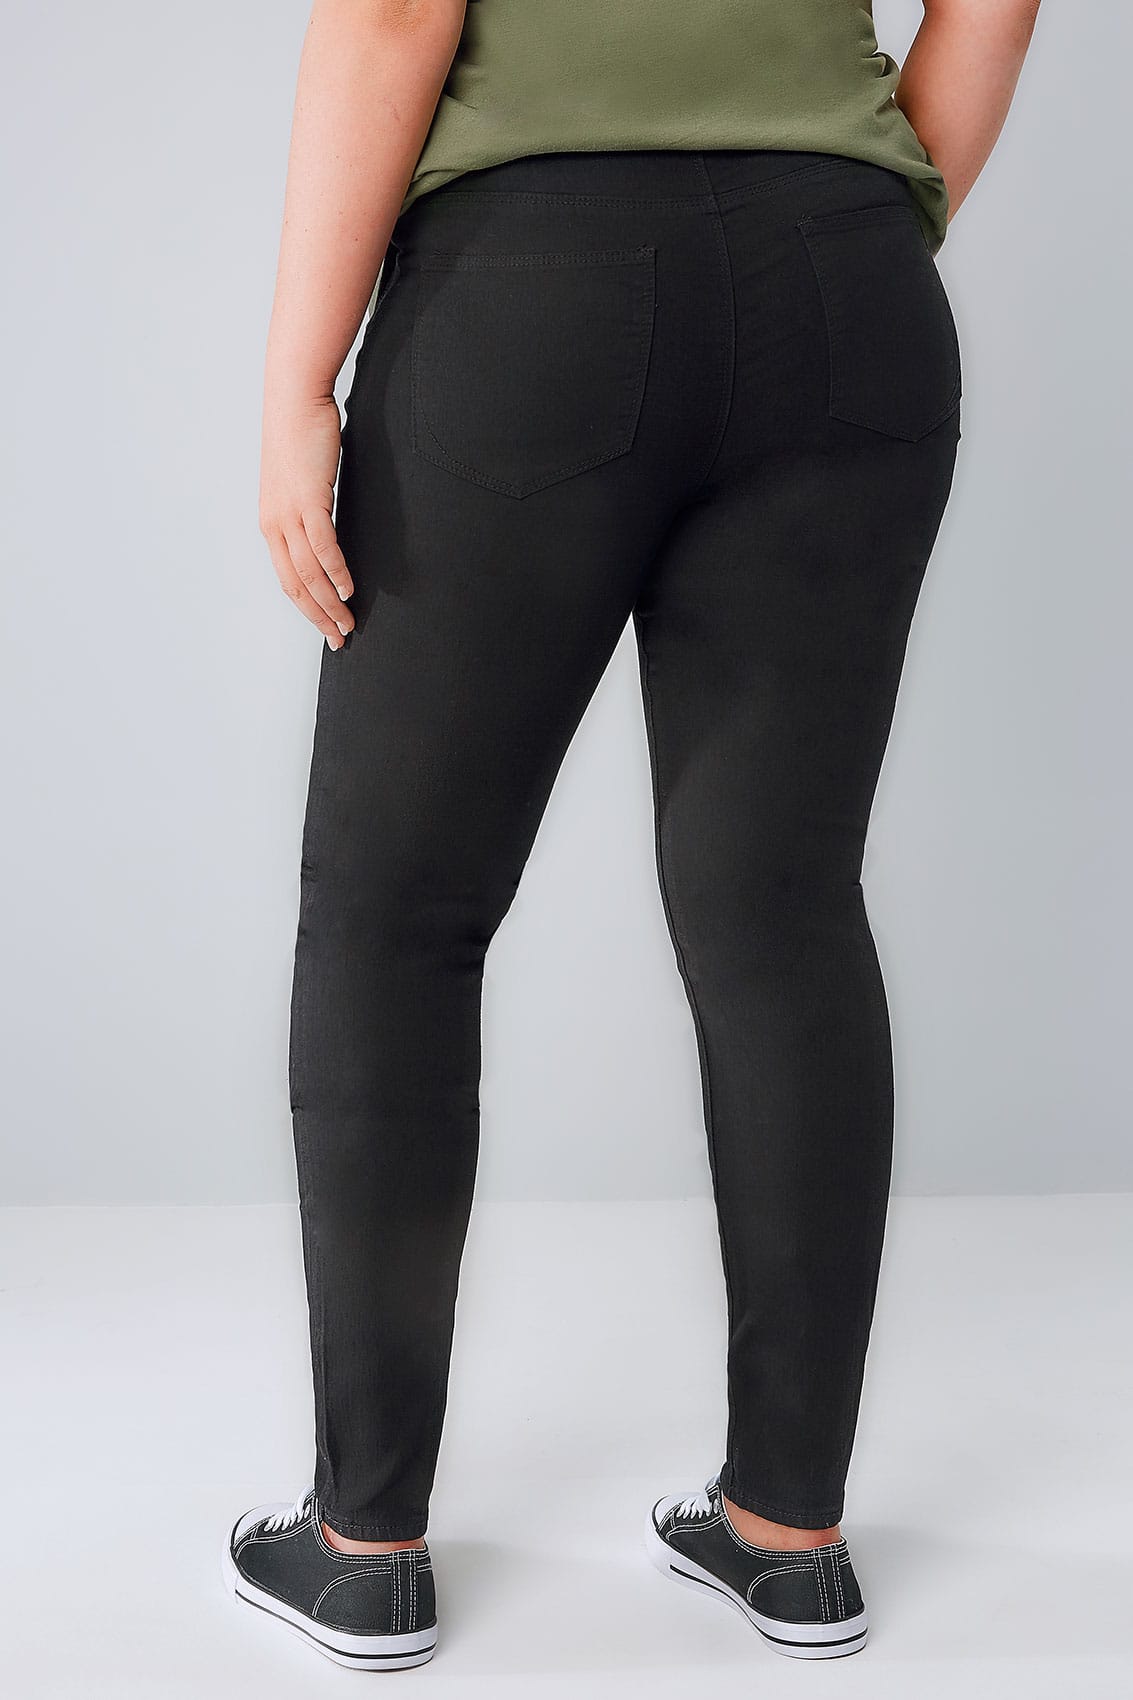 Black Basic 5 Pocket Skinny Ava Jeans Plus Size 16 To 32